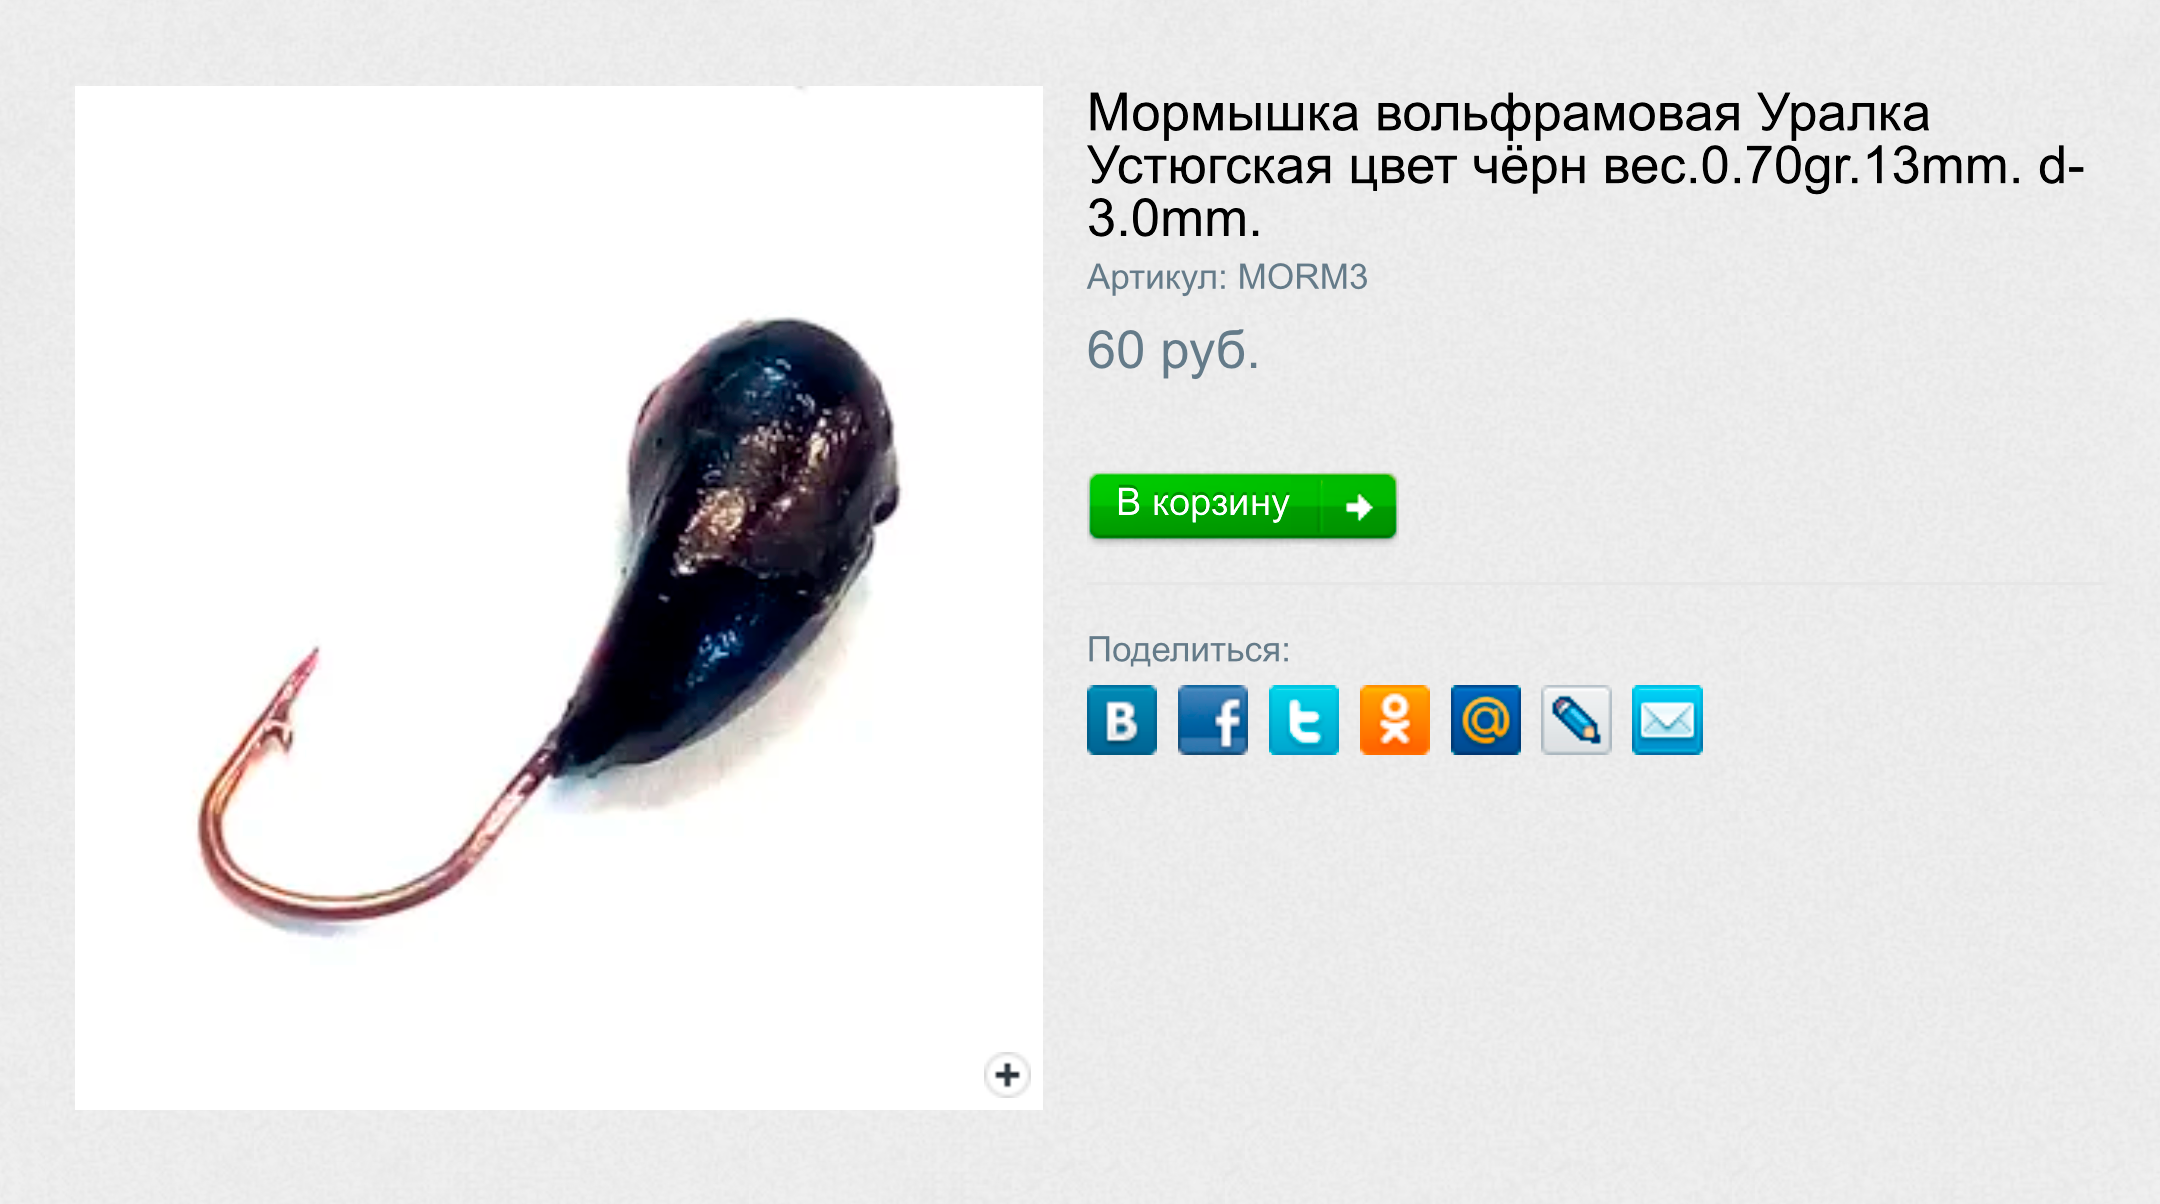 Уралка напоминает изогнутую каплю. На такую мормышку обычно ловят окуня. Источник: mormyshking.ru